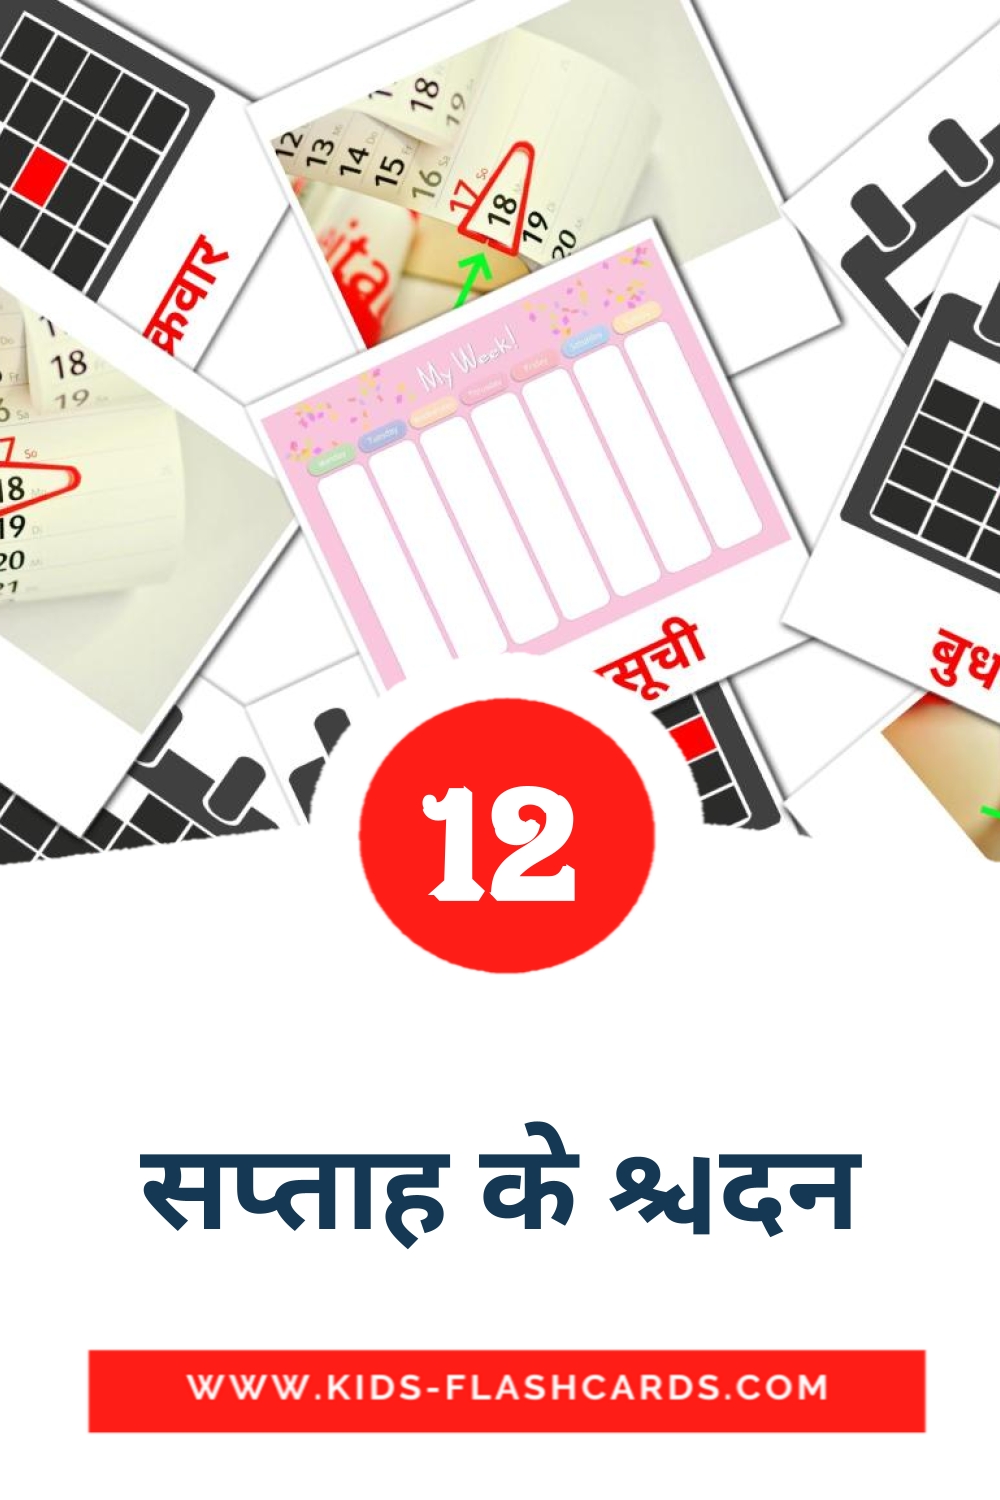 12 सप्ताह के दिन fotokaarten voor kleuters in het hindi